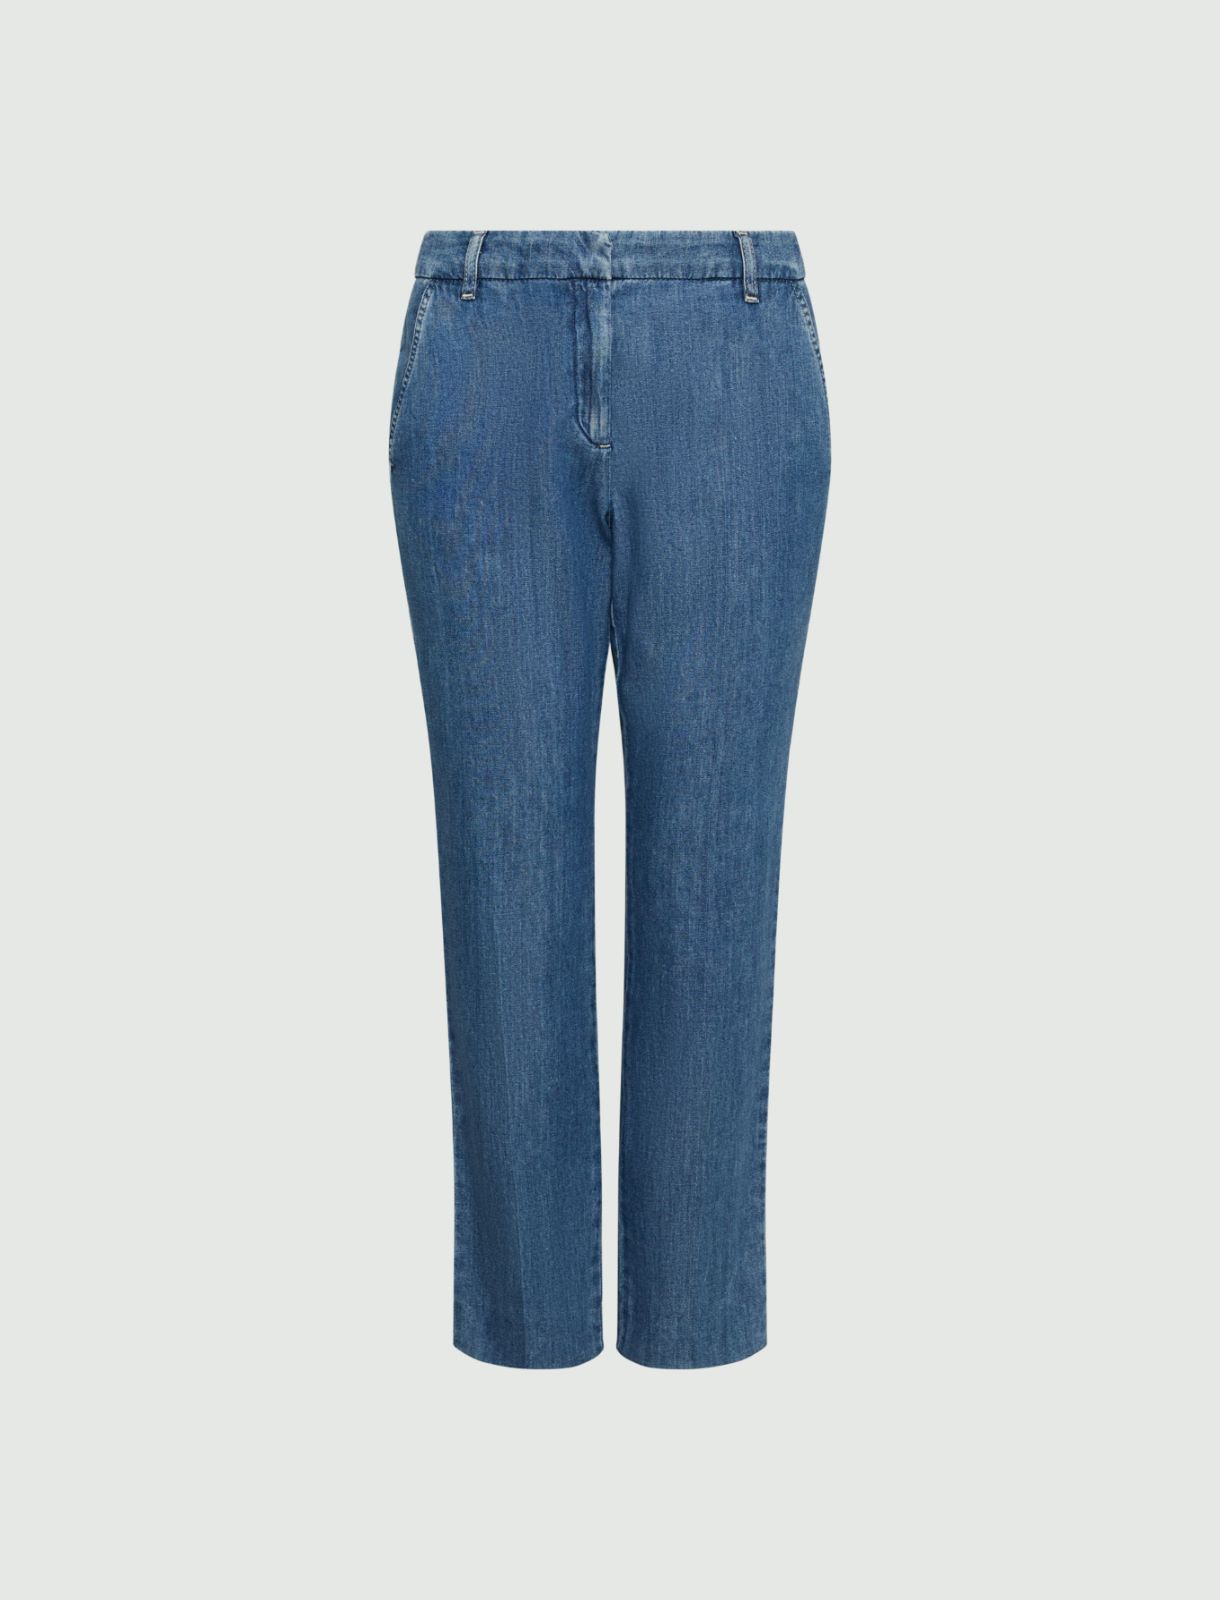 Chino jeans - Blue jeans - Marella - 6